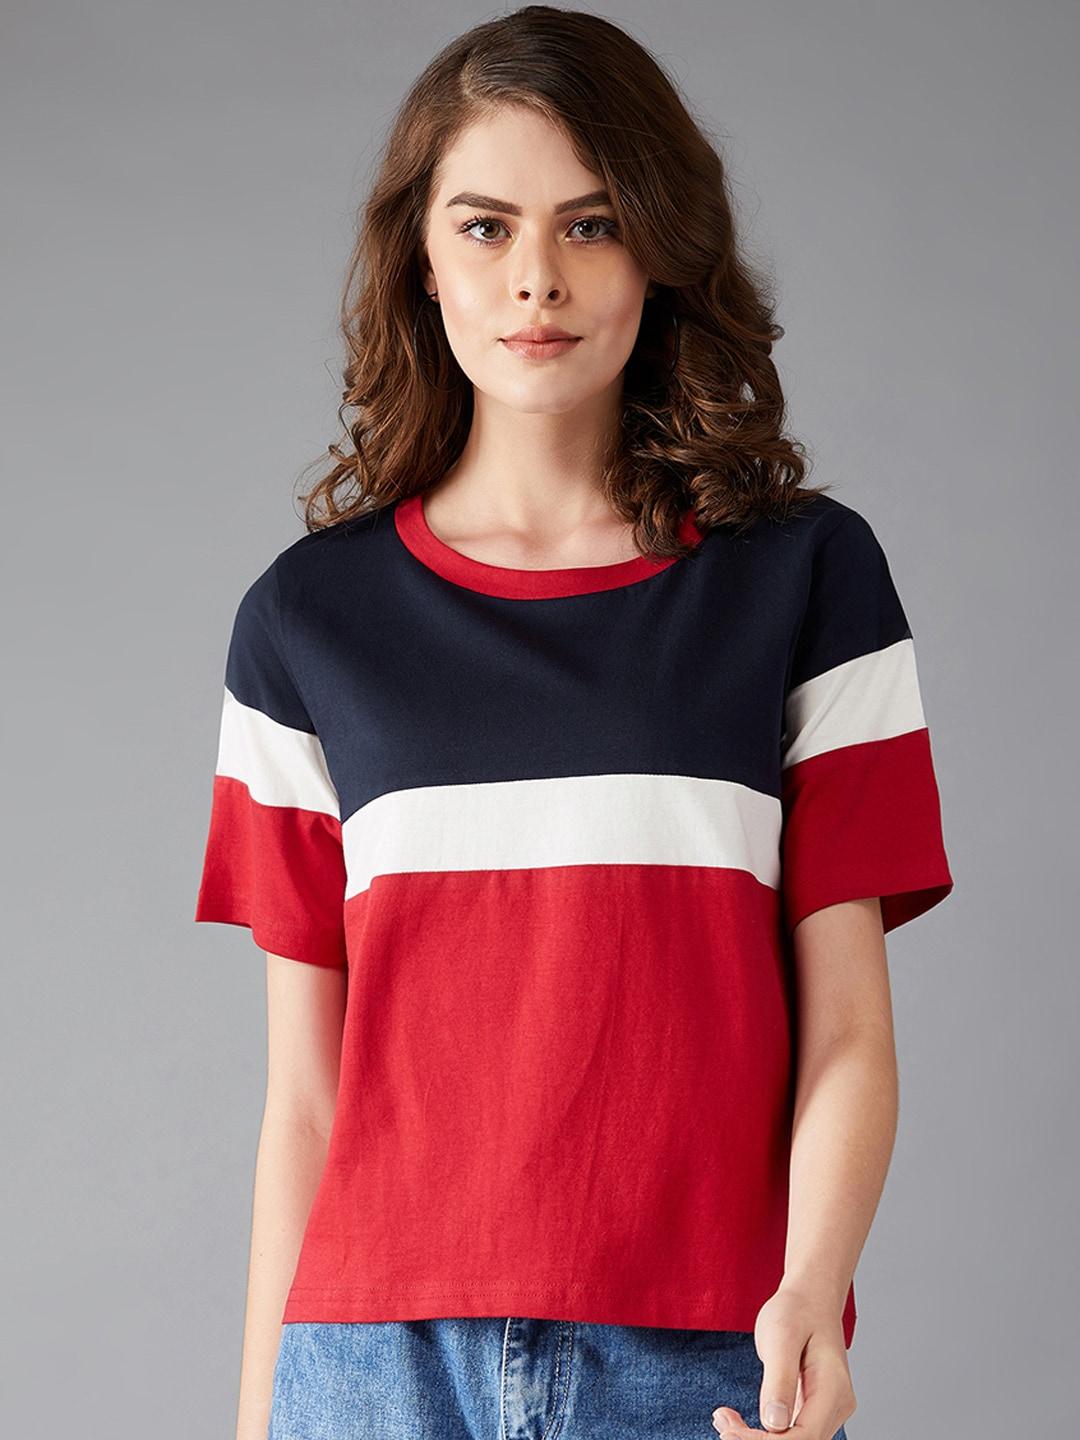 dolce-crudo-women-red-colourblocked-round-neck-t-shirt